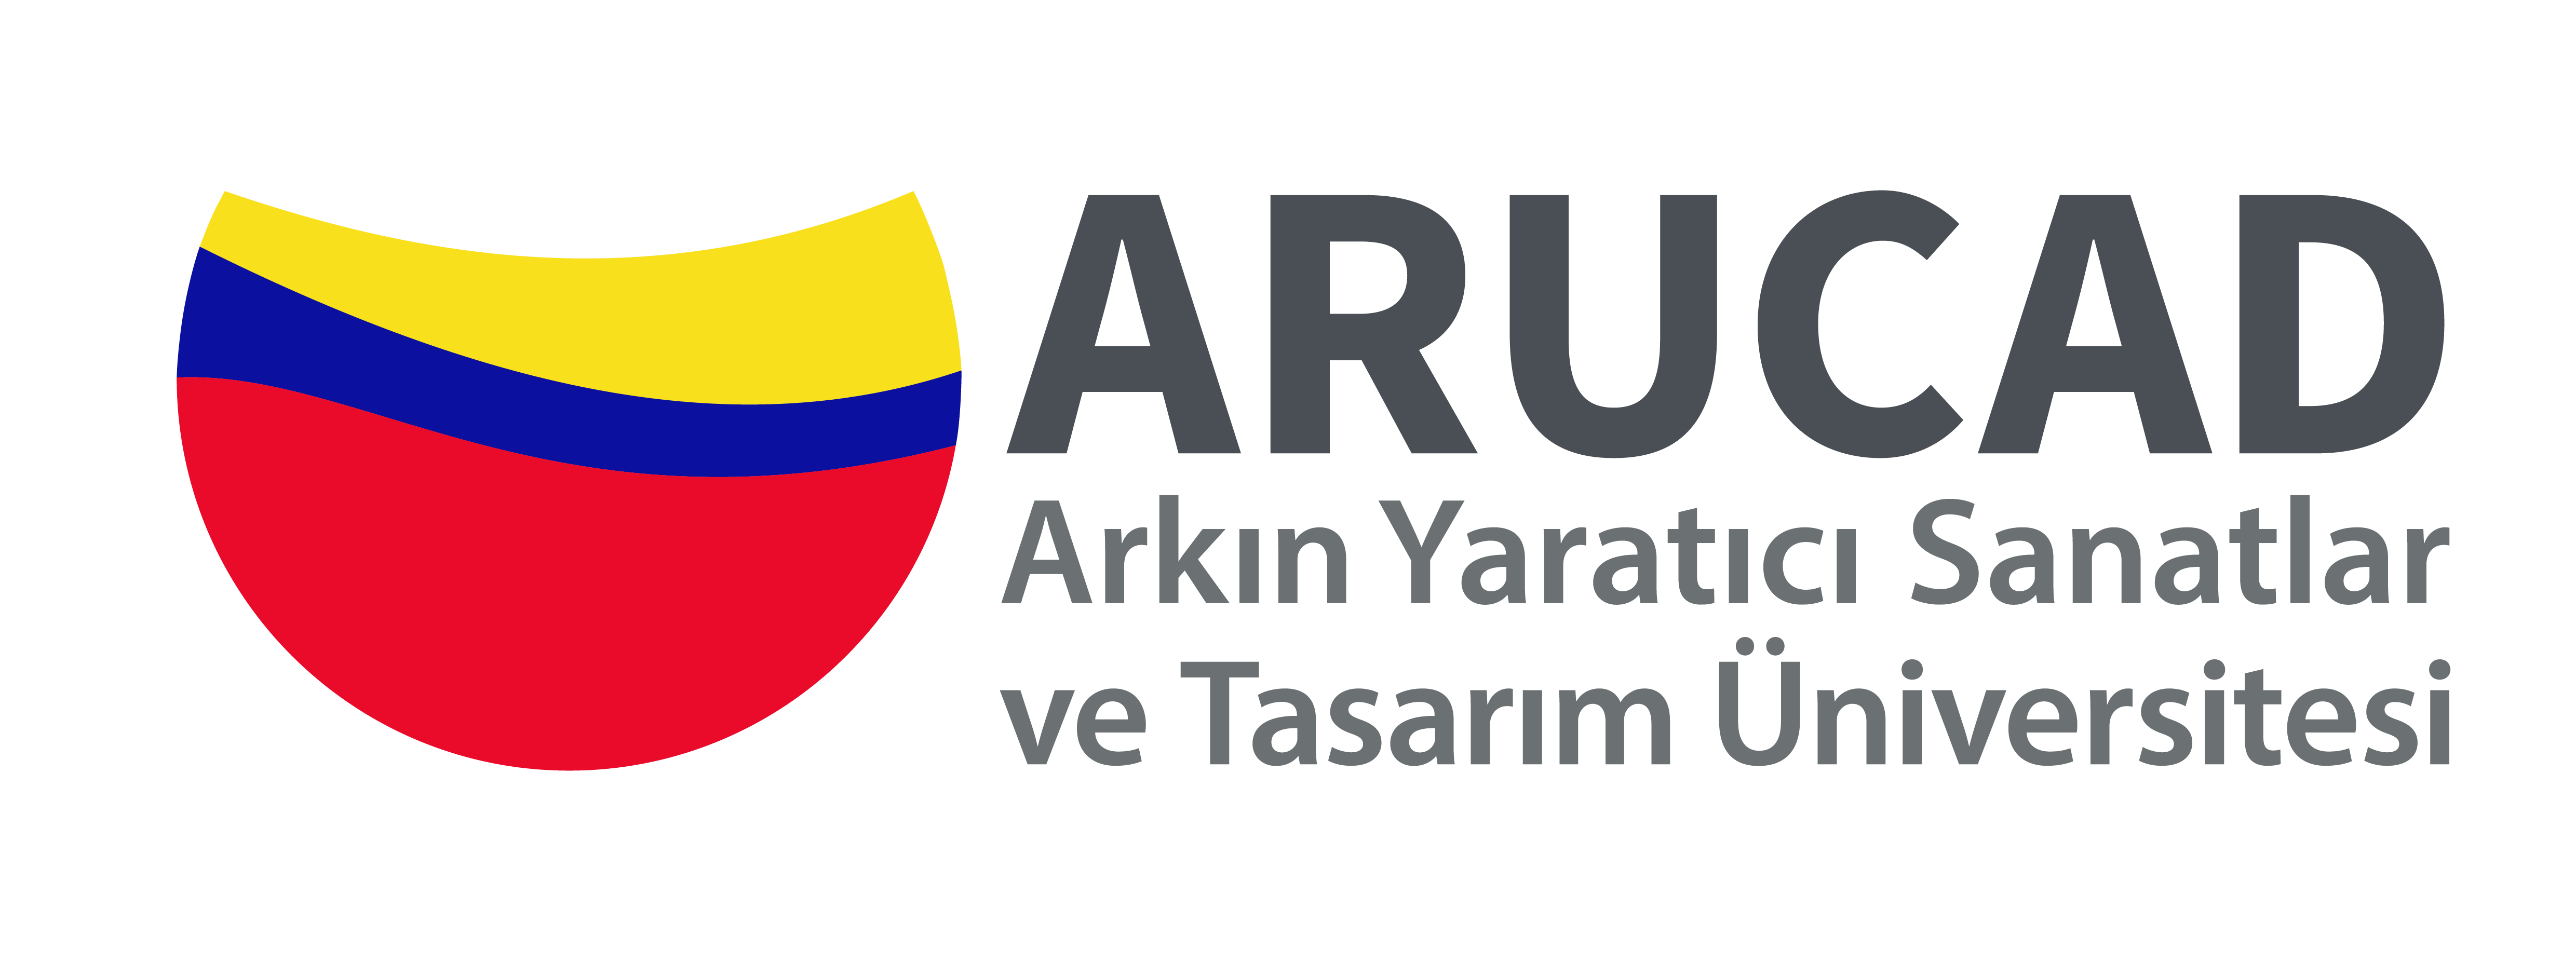 Arkin University of Creative Arts and Design (ARUCAD)